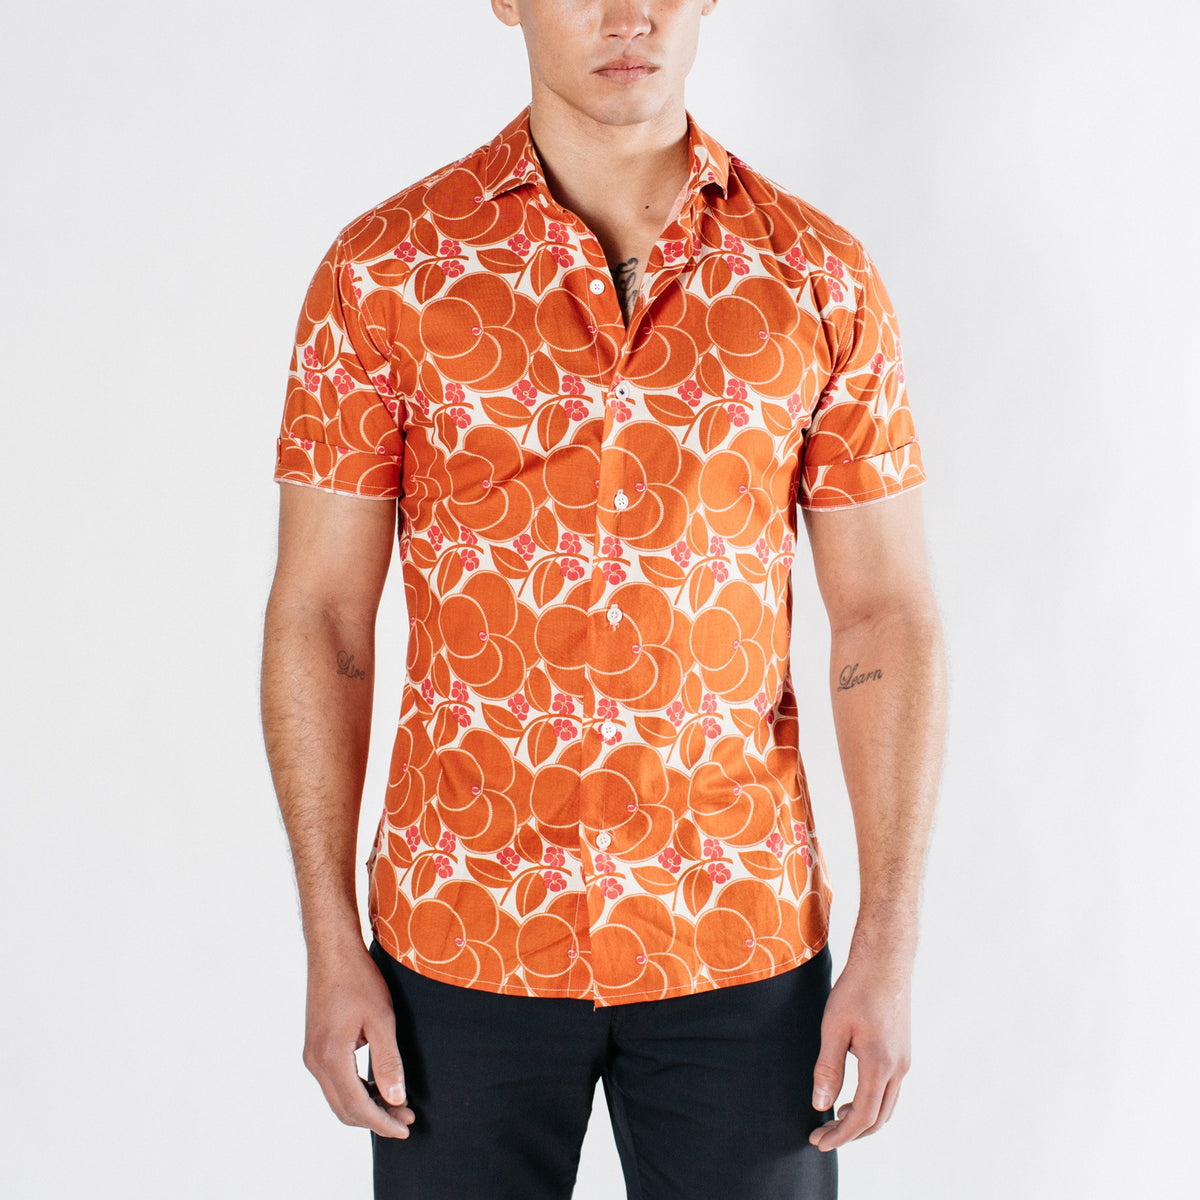 BBQ Shirt - Orange Floral Shirts Commonwealth Proper